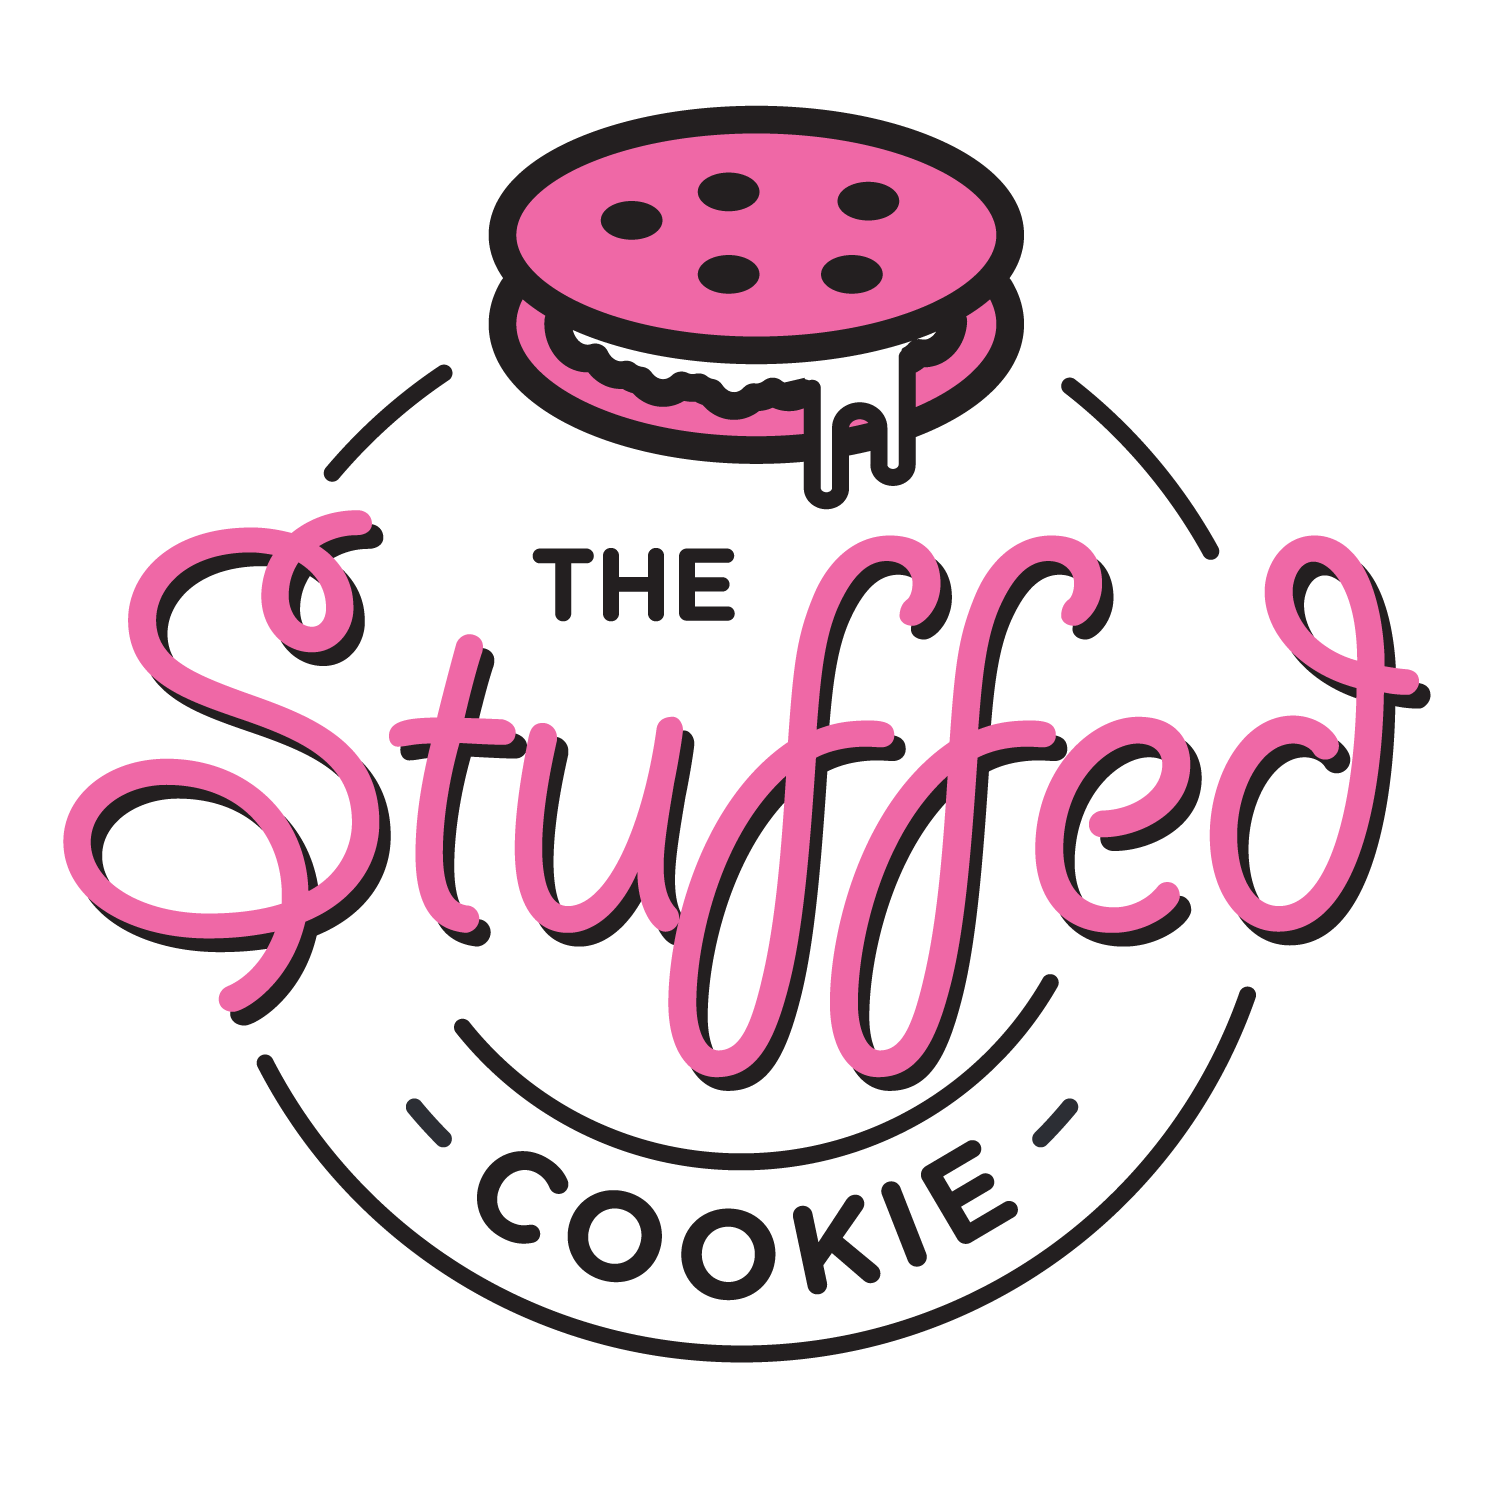 The Stuffed Cookie